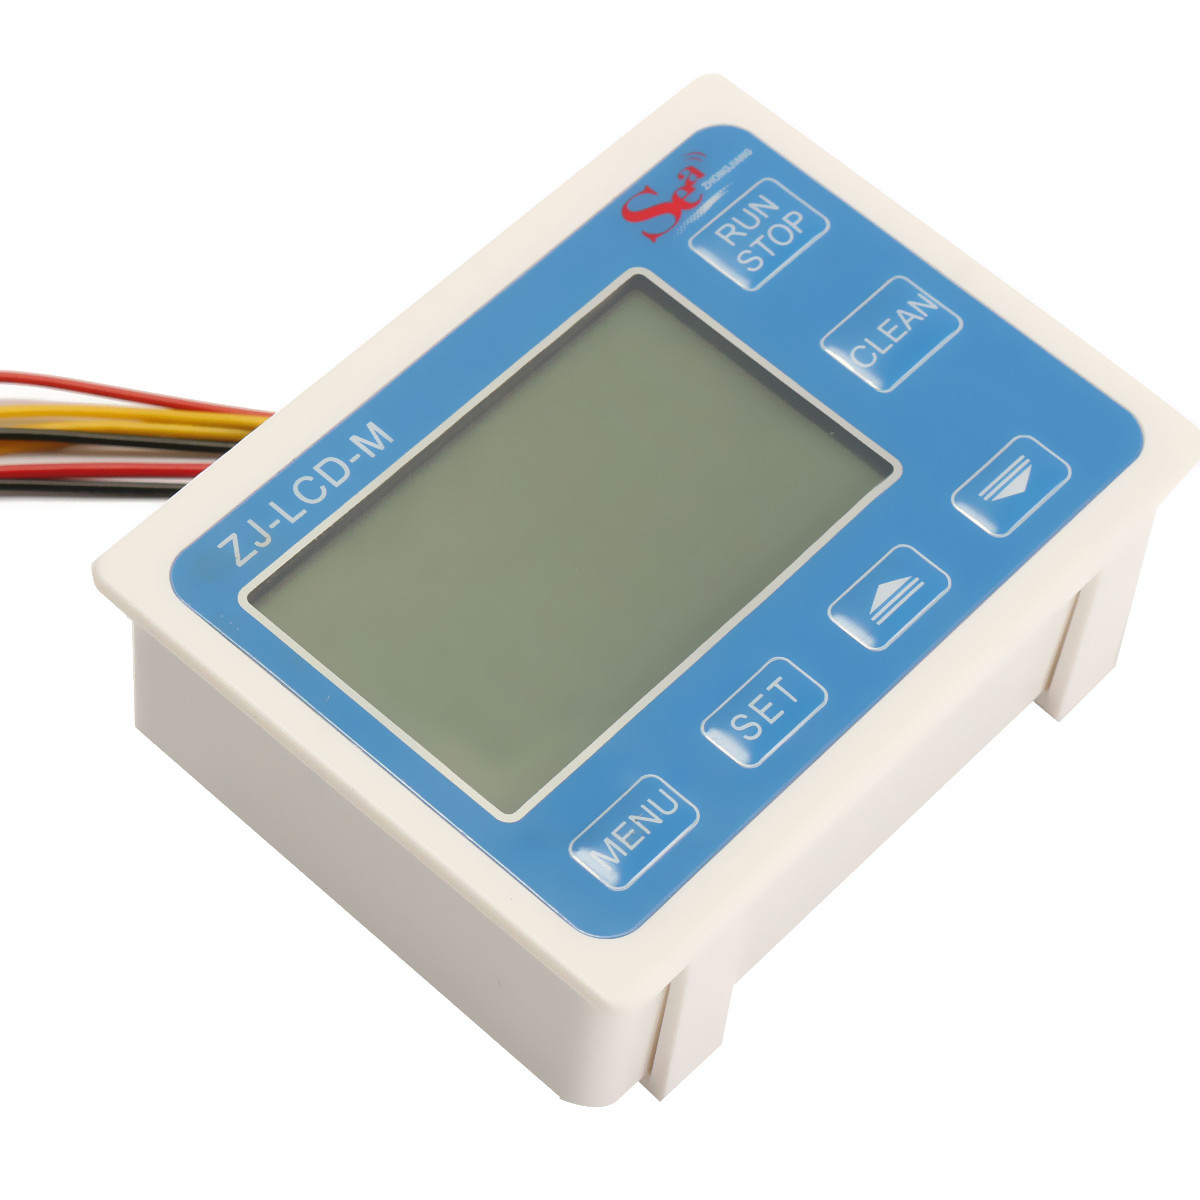 12quot-Water-Flow-Control-LCD-Meter-With-Flow-Sensor-and-Solenoid-val-1056829